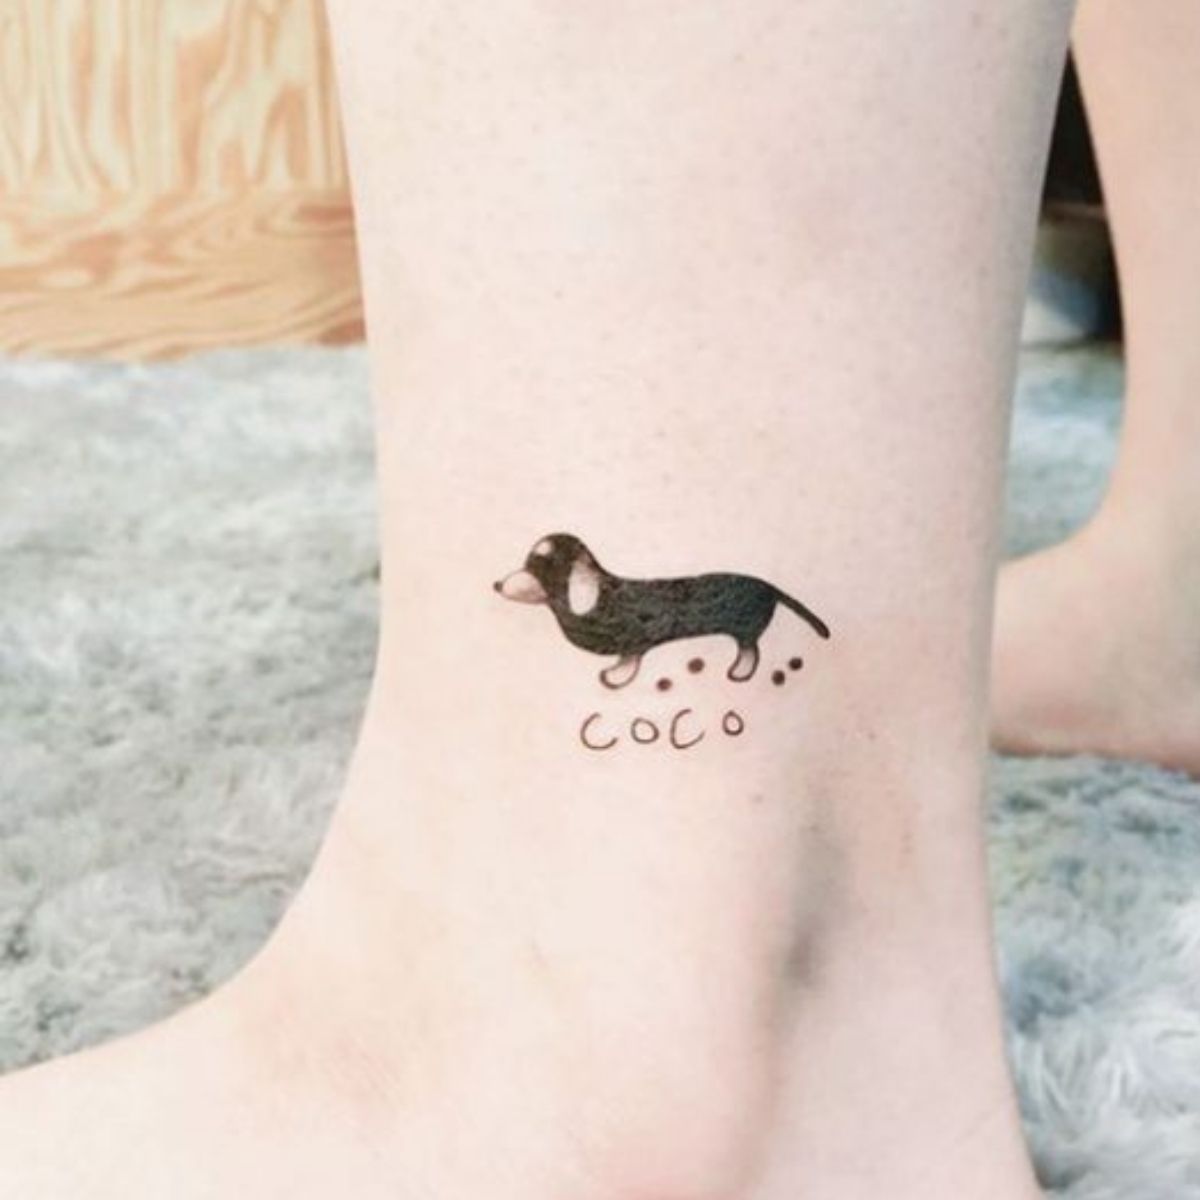 21 Touching Dog Tattoo Ideas For Women  Styleoholic